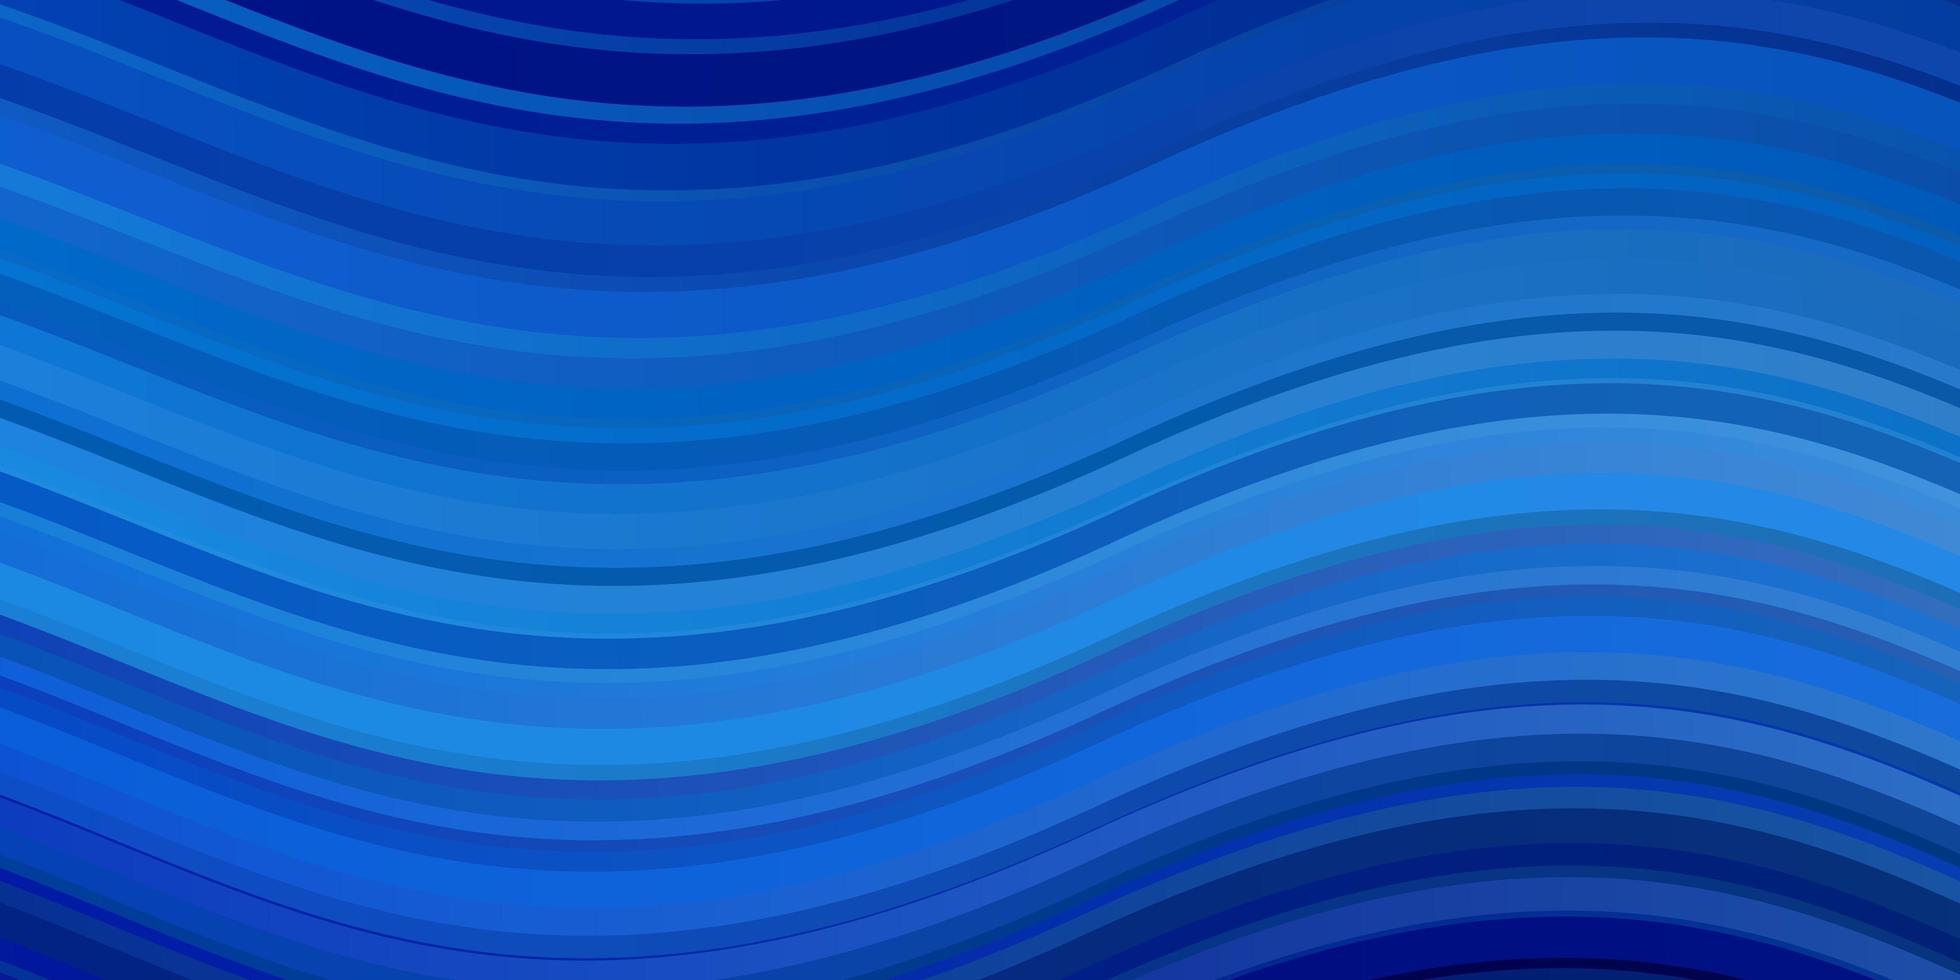 diseño de vector azul claro con curvas.